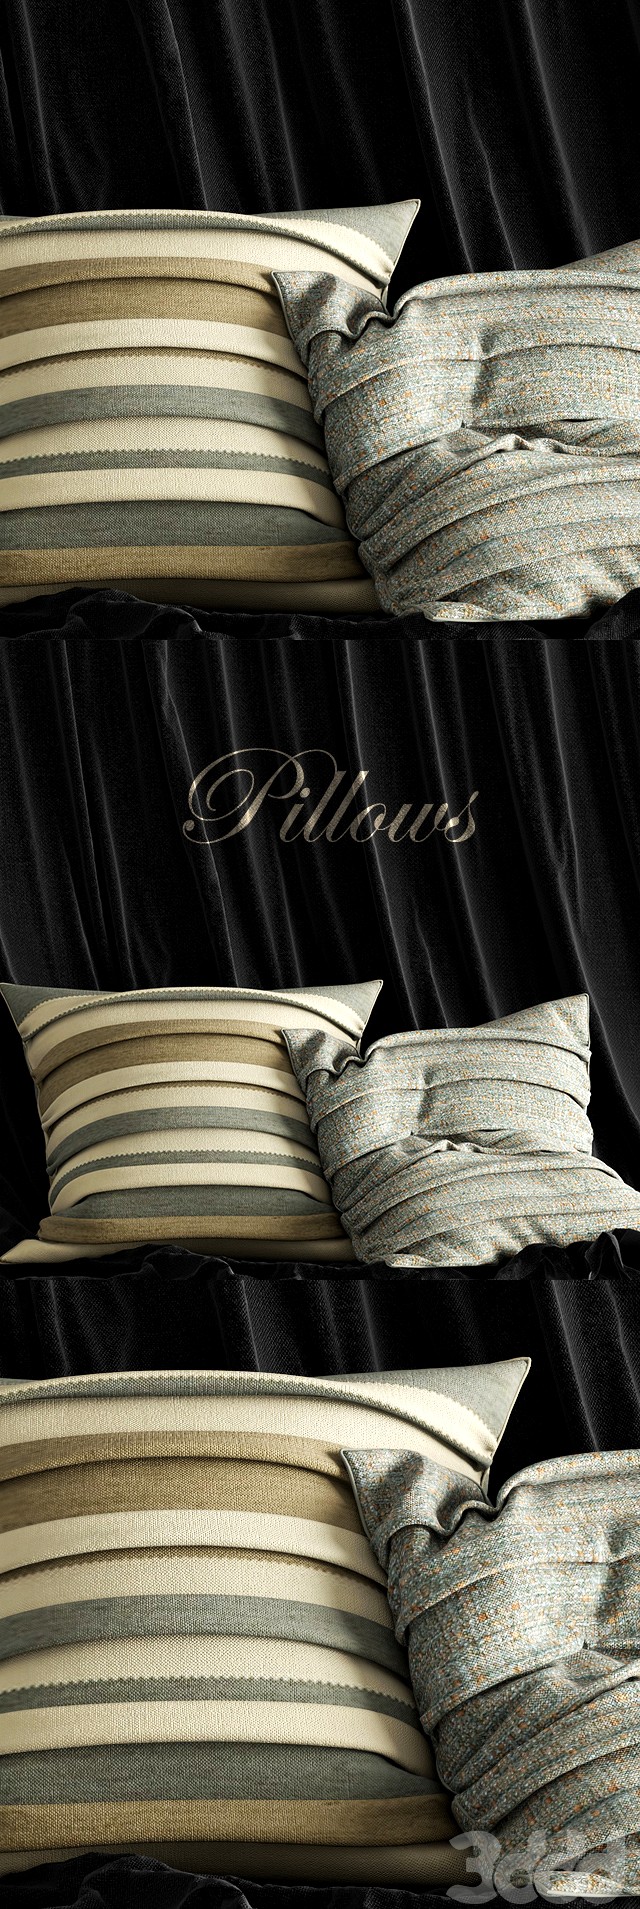 Pillows #5